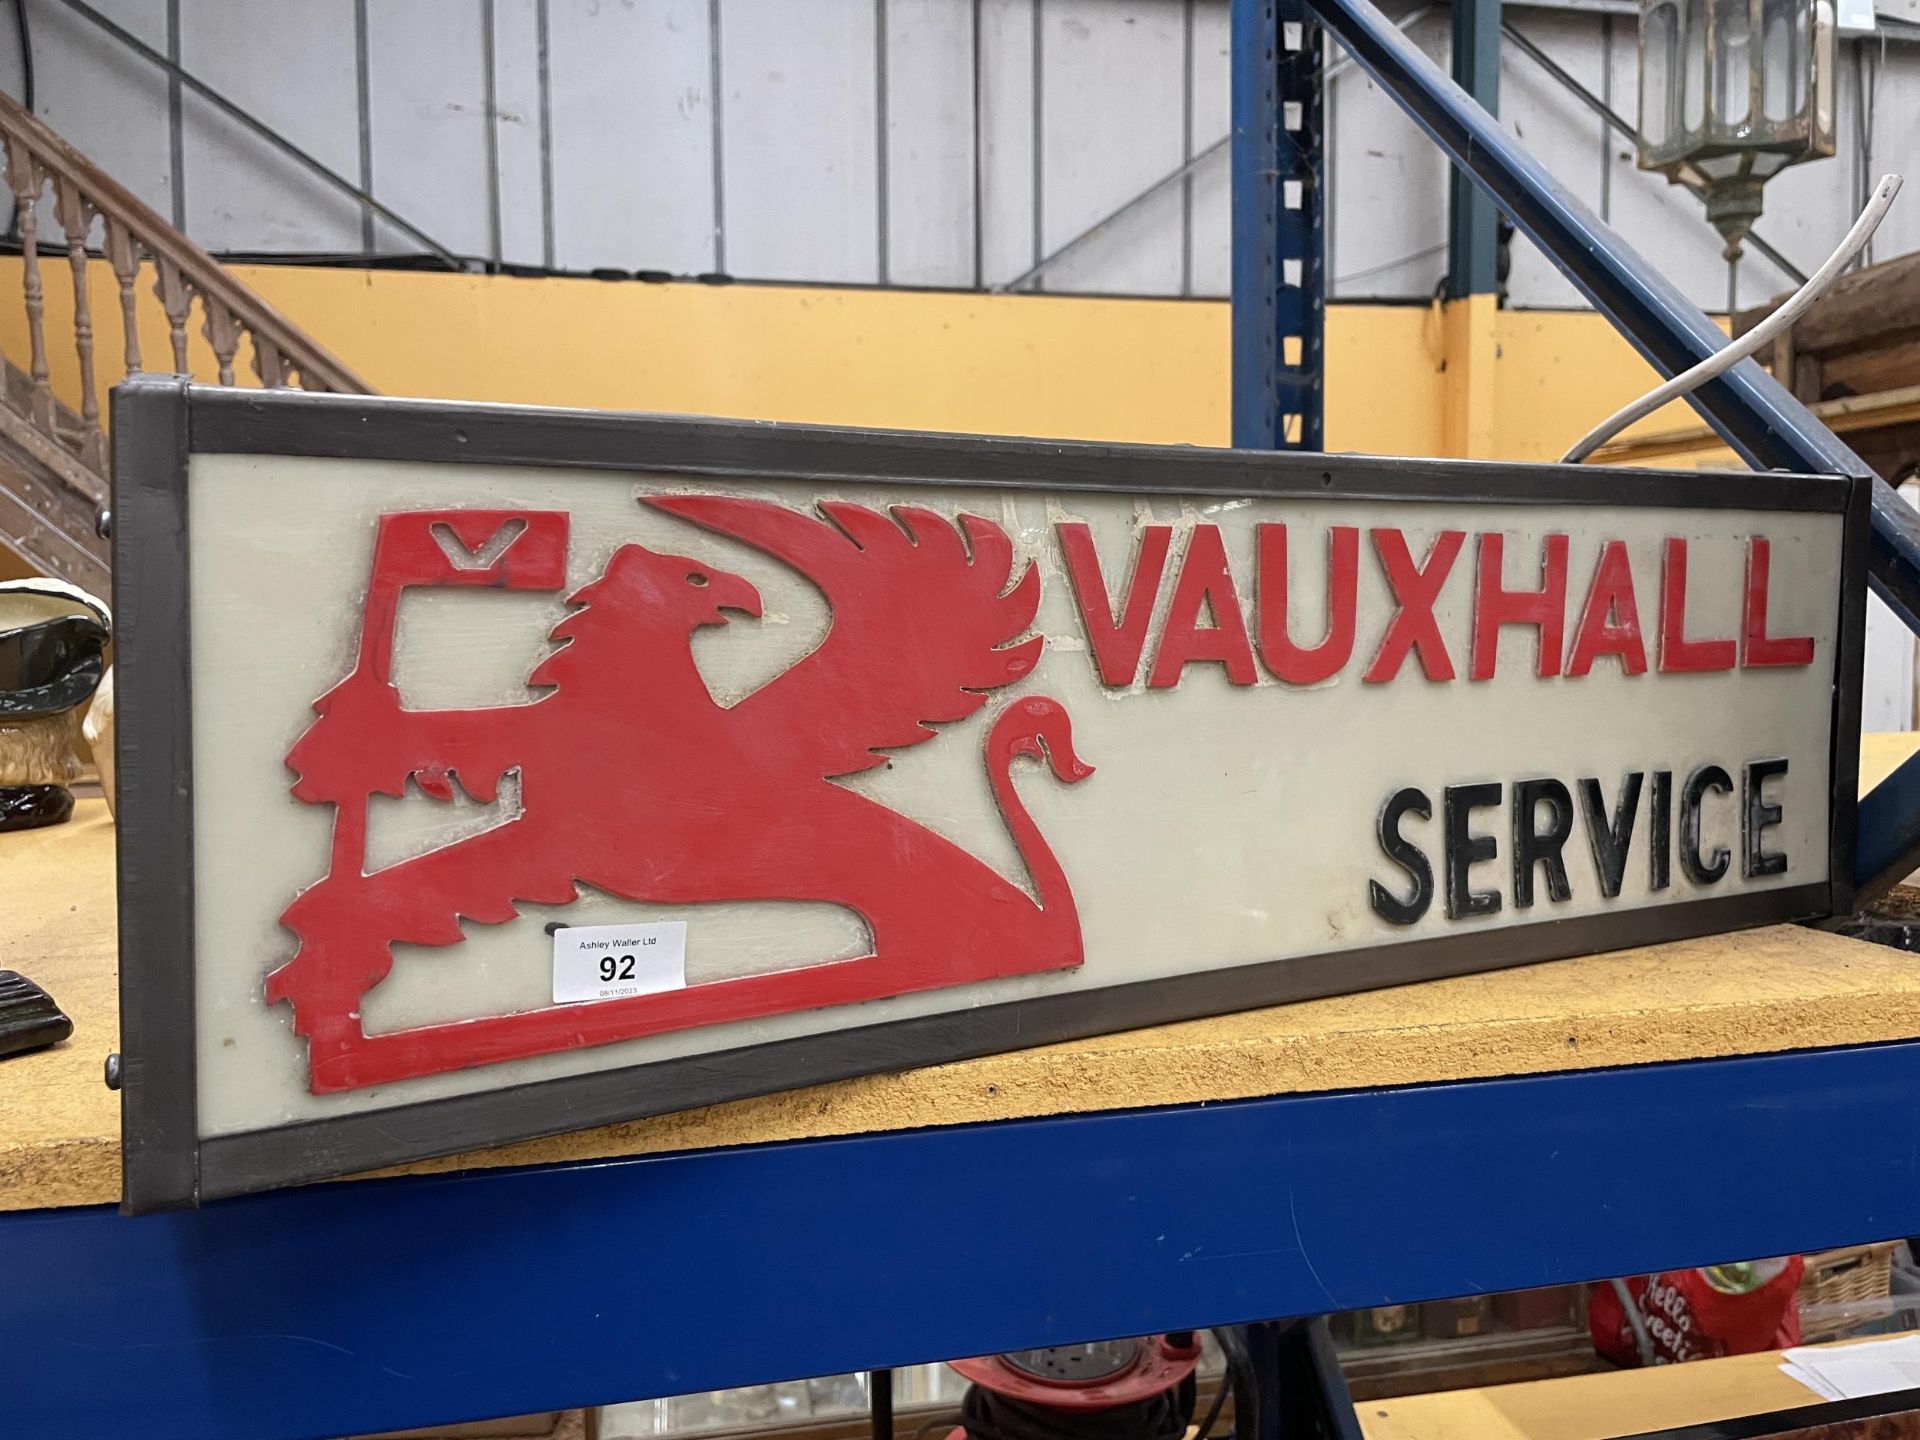 A VAUXHALL SERVICE ILLUMINATED BOX SIGN